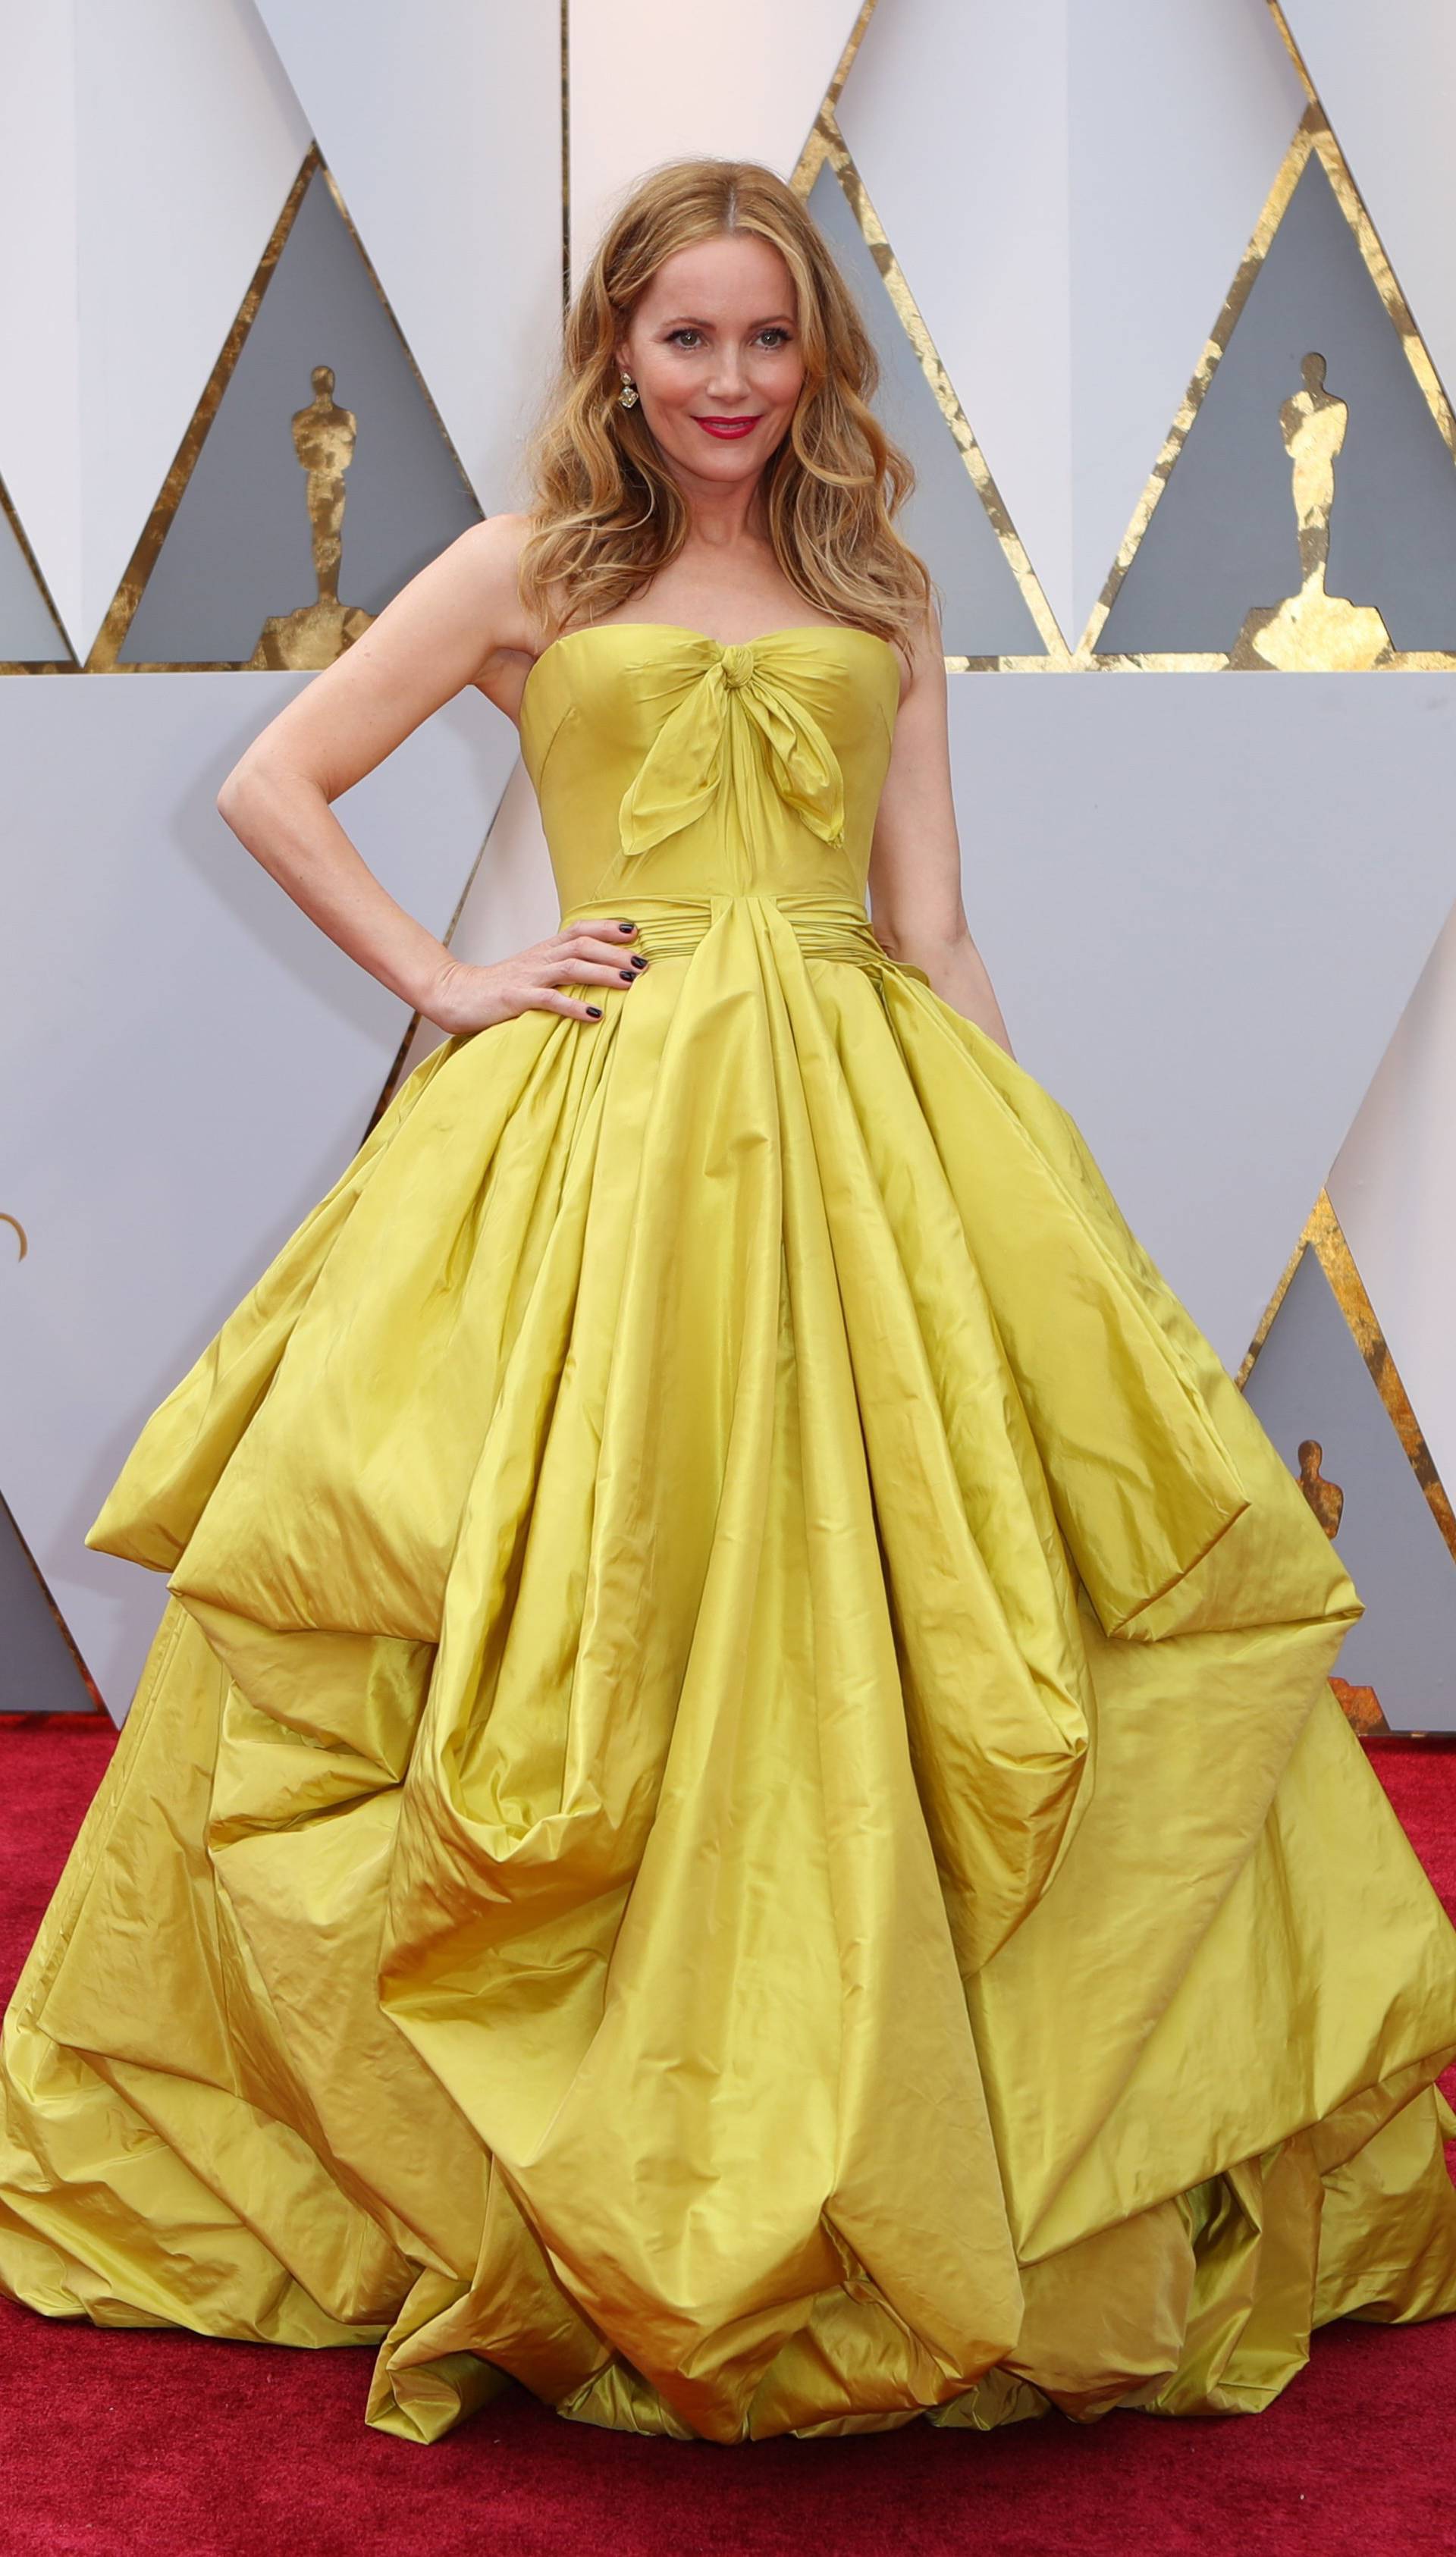 89th Academy Awards - Oscars Red Carpet Arrivals